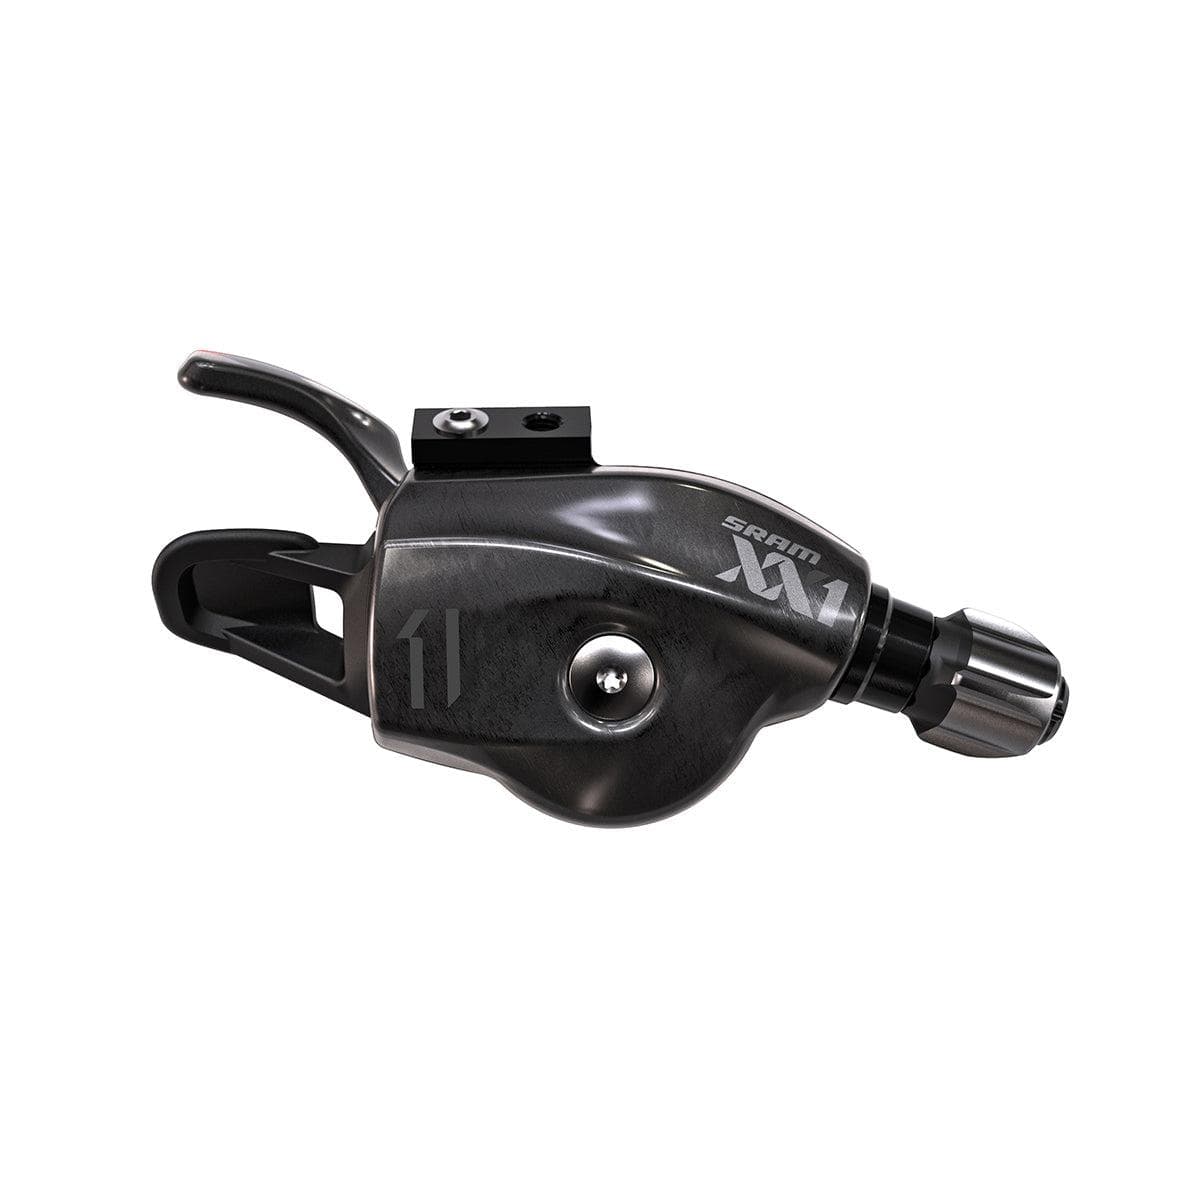 Sram Xx1 Shifter - Trigger 11 Speed Rear W Discrete Clamp Black: Black 11 Speed